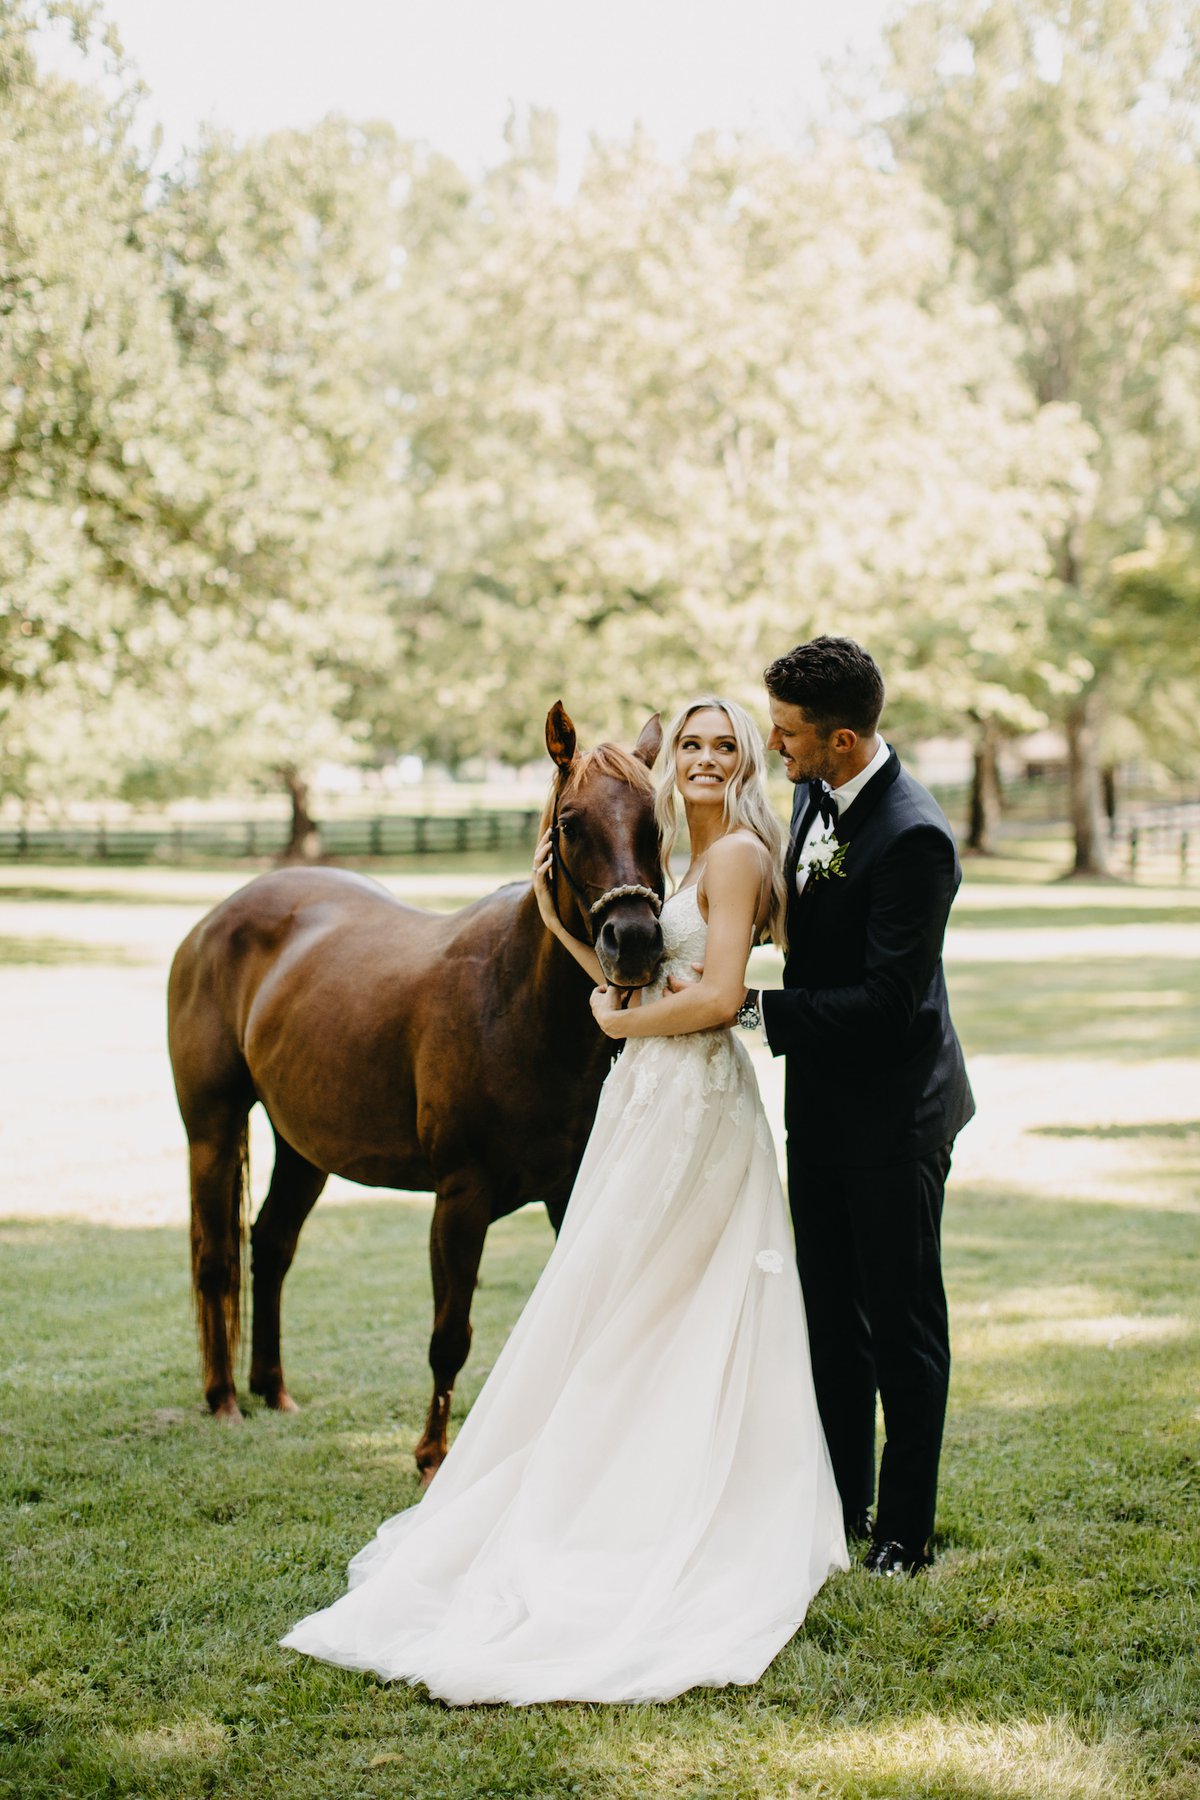 Real Weddings: Ellie & Roman Josi - Nashville Lifestyles